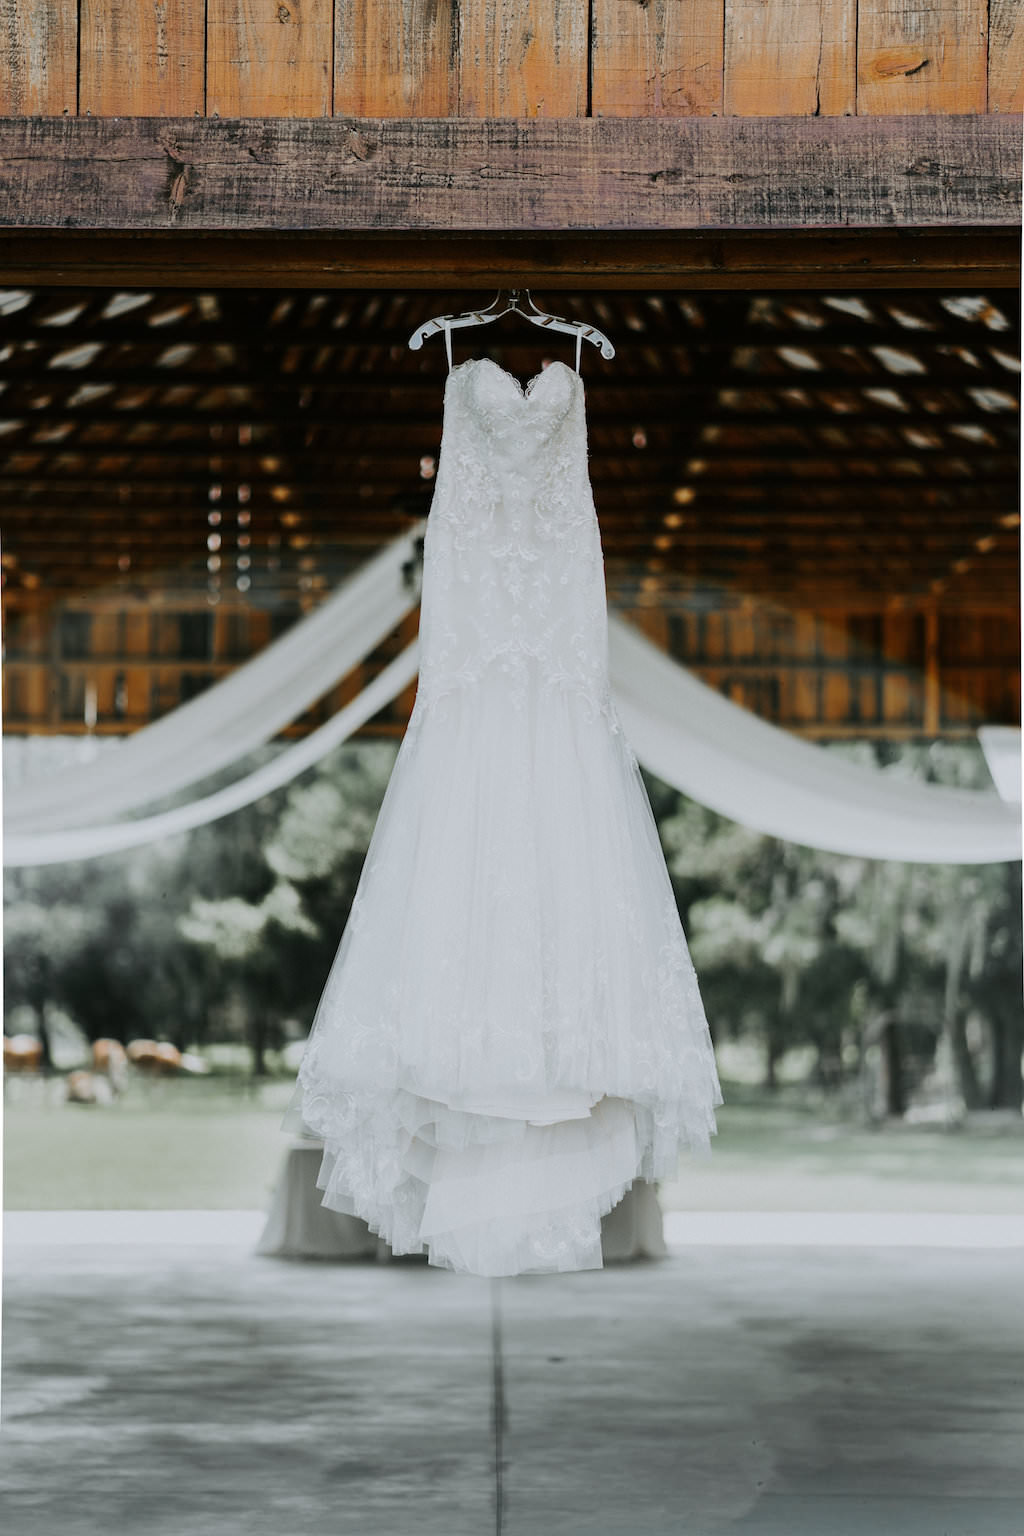 Rustic Barn Wedding Reception Venue with Sweetheart A Line Wedding Dress on Hanger